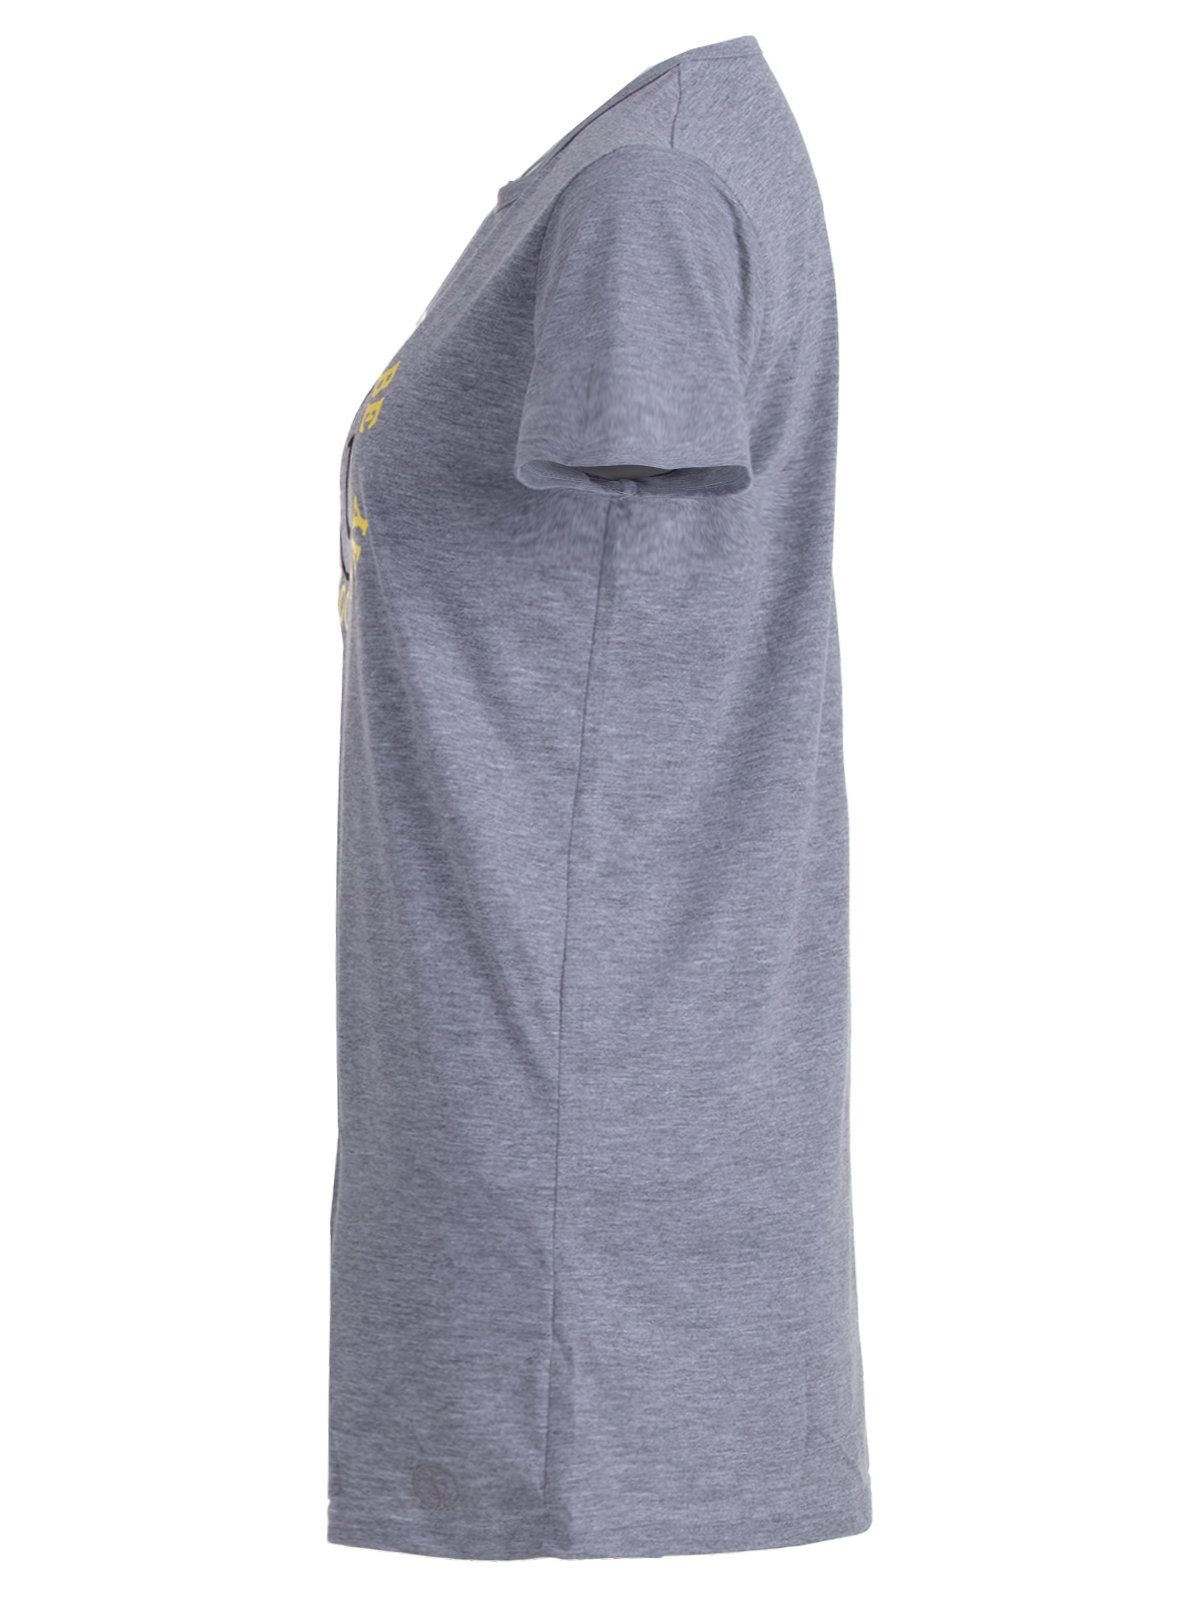 Nachthemd Kurzarm - grau Smiley Nachthemd zeitlos